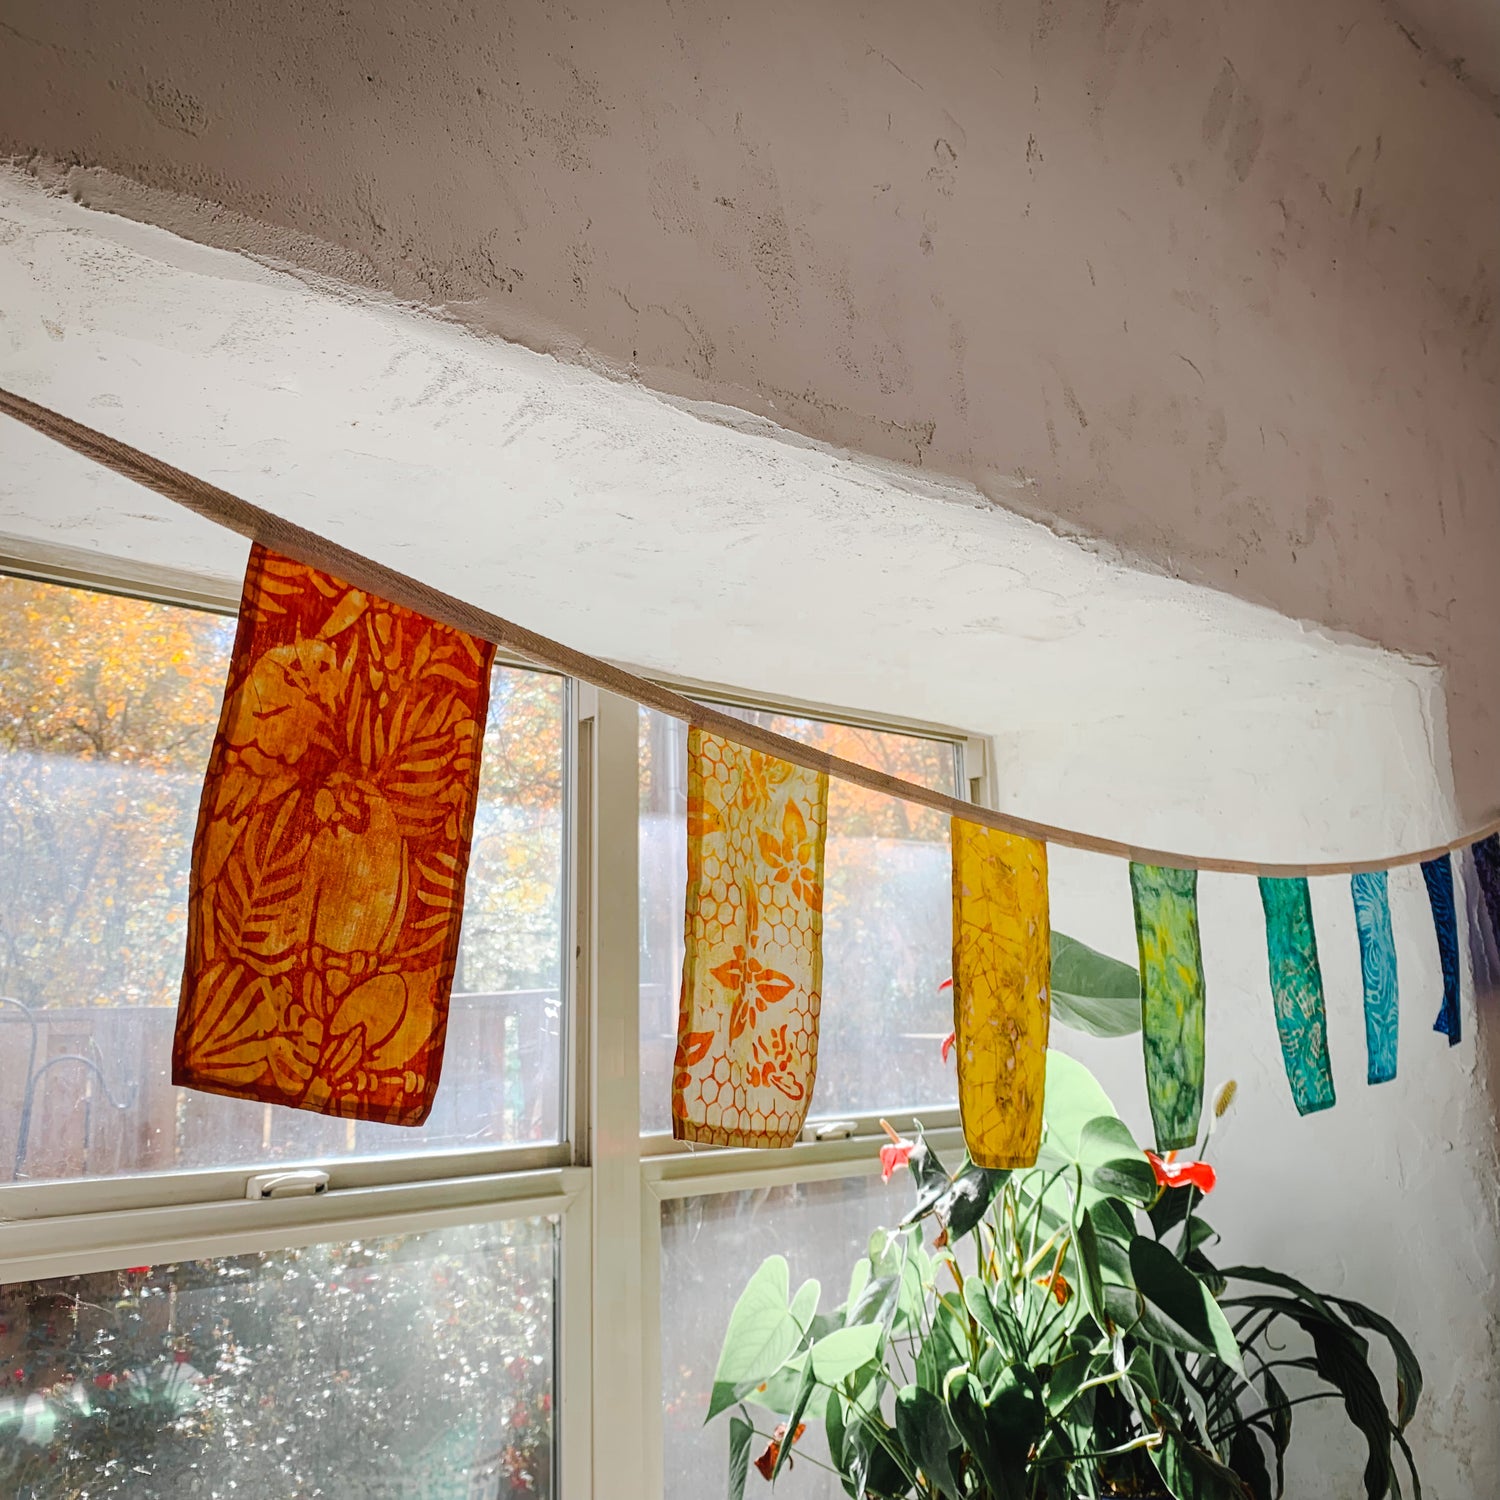 handmade rainbow bunting flags are draped across an old cabin window